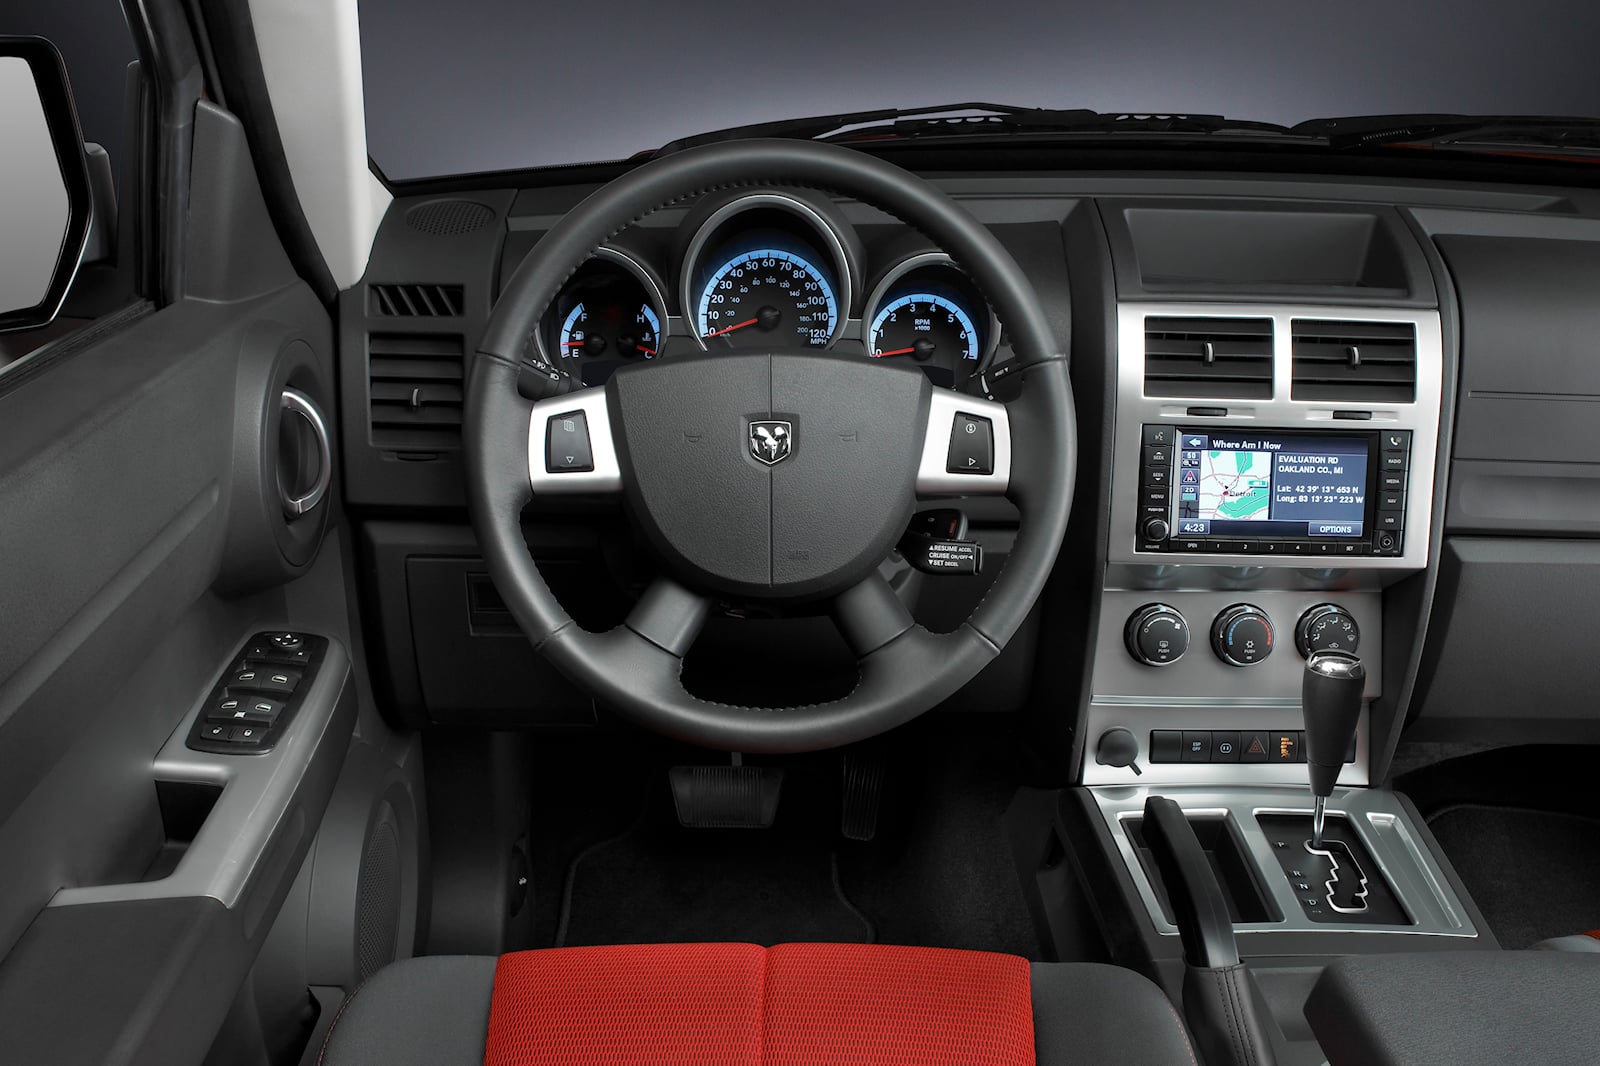 Dodge Nitro interior - Cockpit